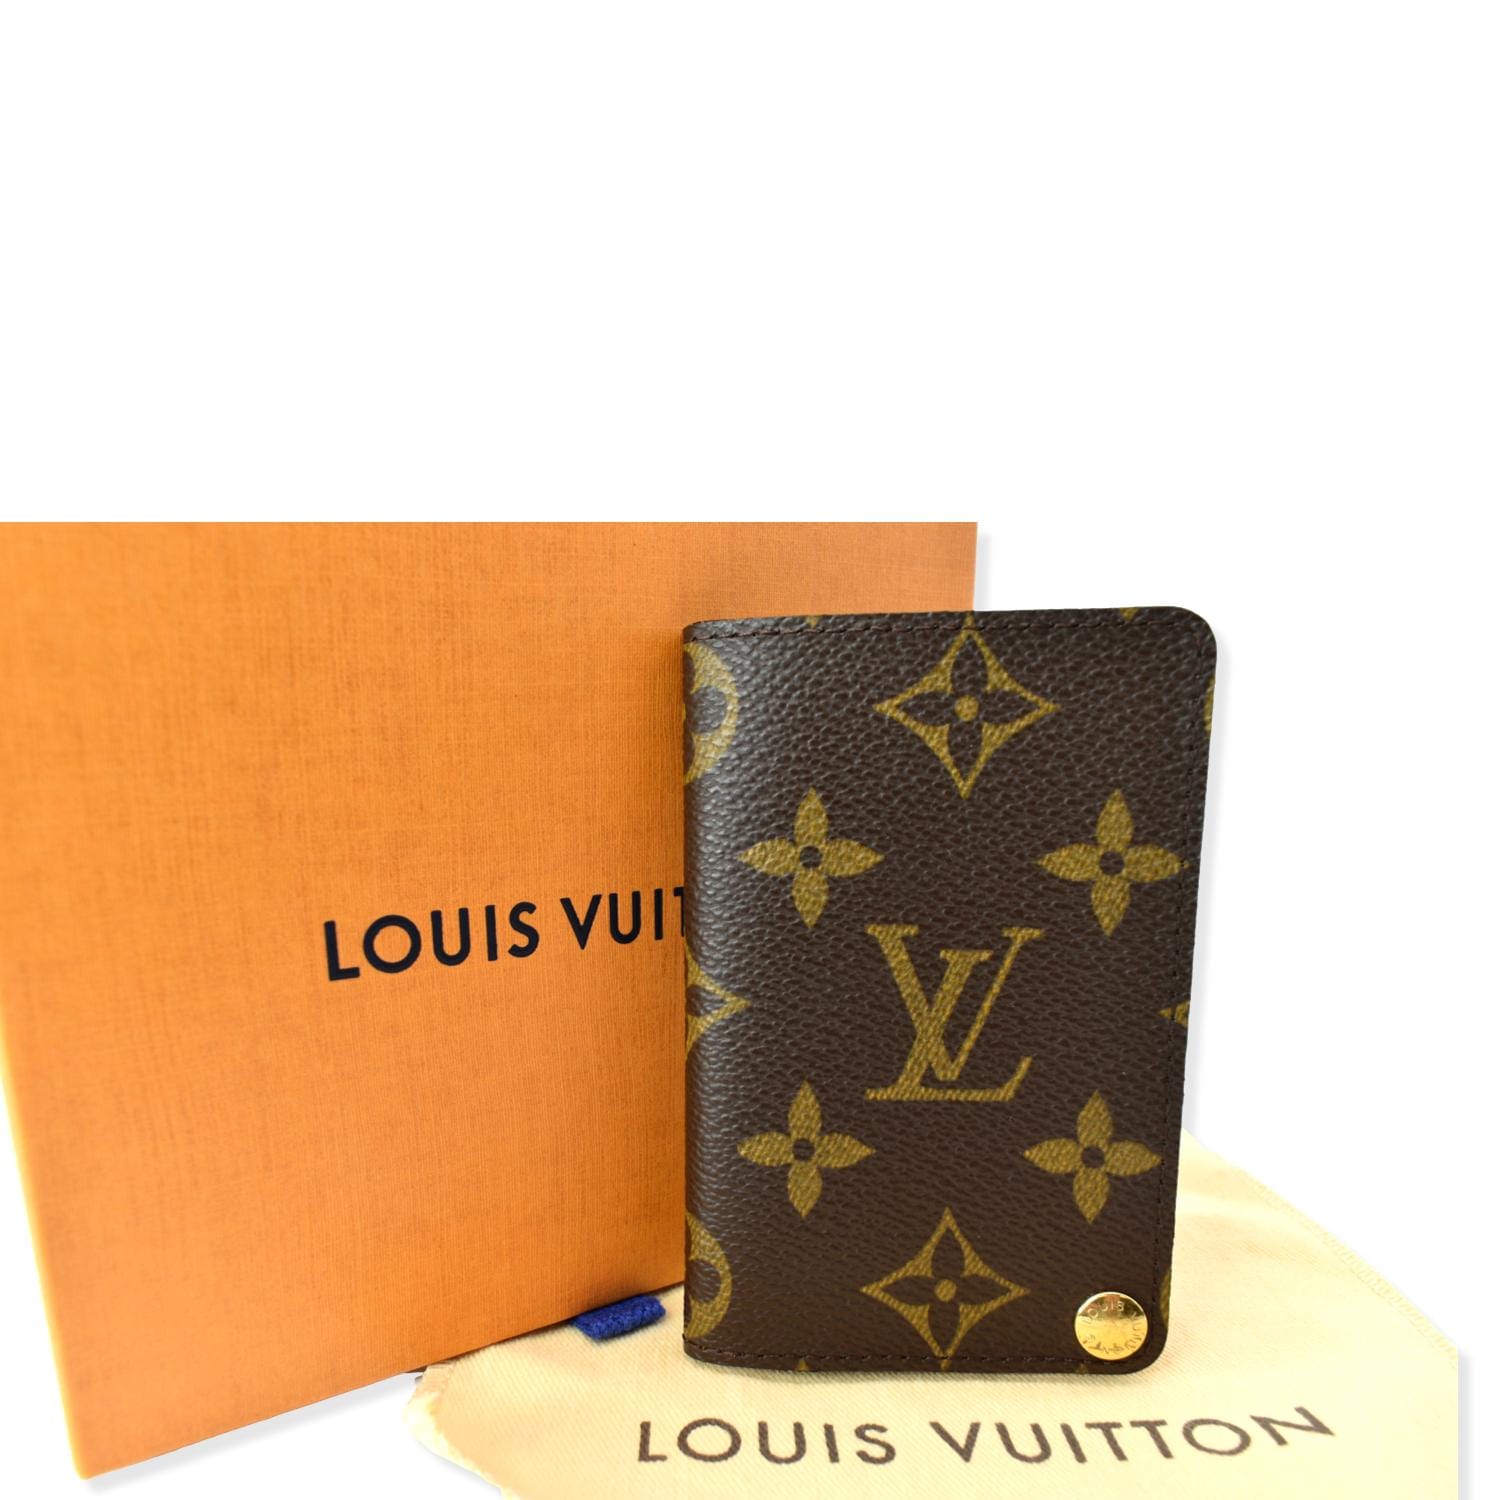 Sold at Auction: A vintage Louis Vuitton coin card holder No.7 Trunk L'oeil  monogram canvas wallet